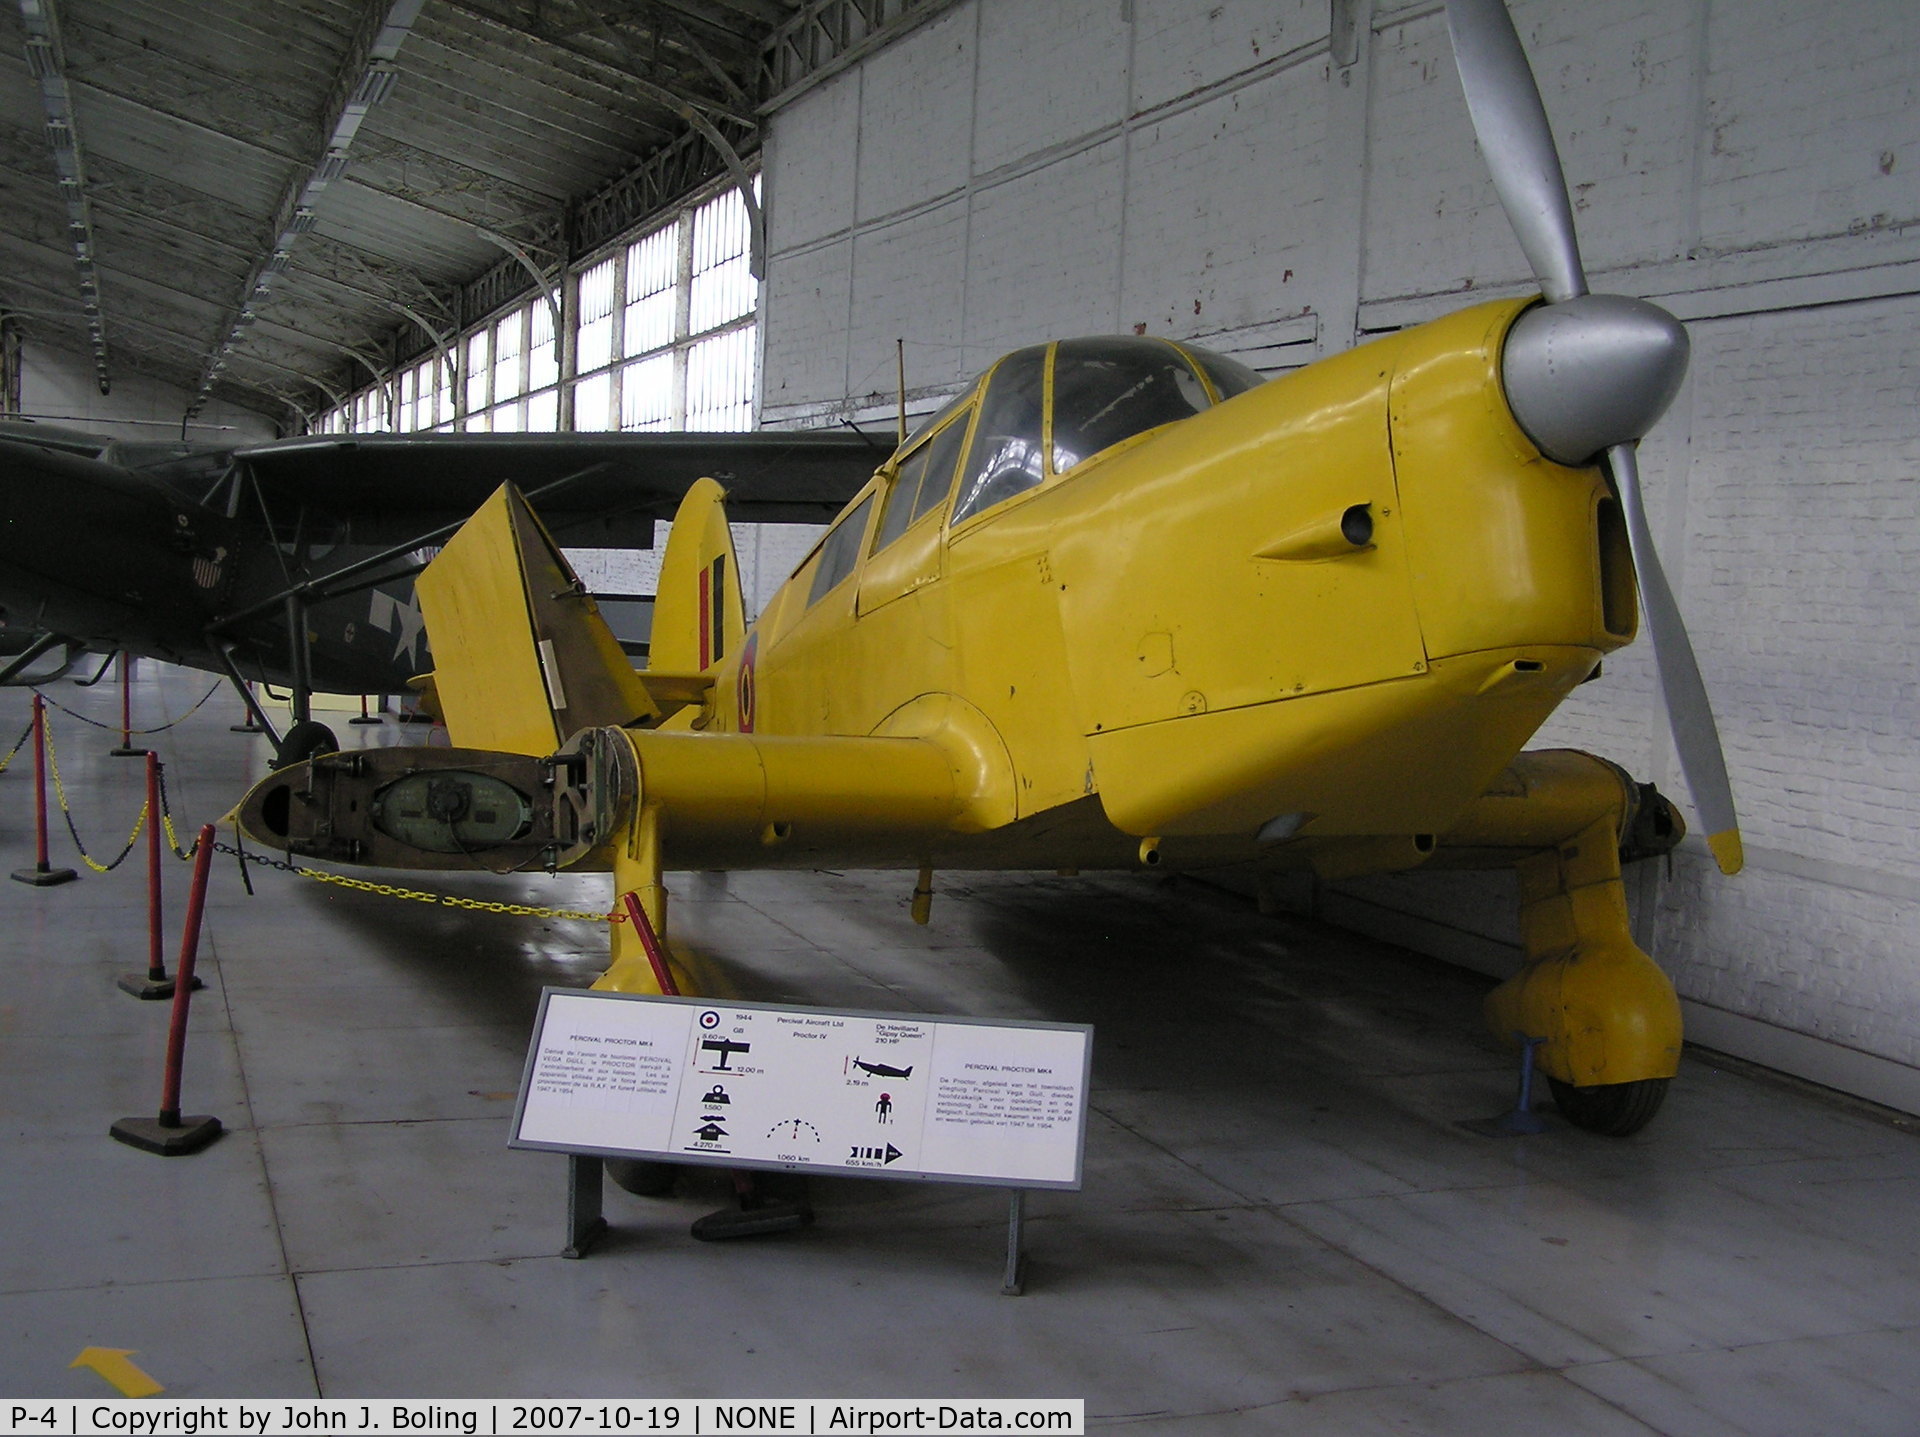 P-4, 1944 Percival P-31 Proctor 4 C/N H-578, Percival Proctor MK4 on display at Brussels Air Museum